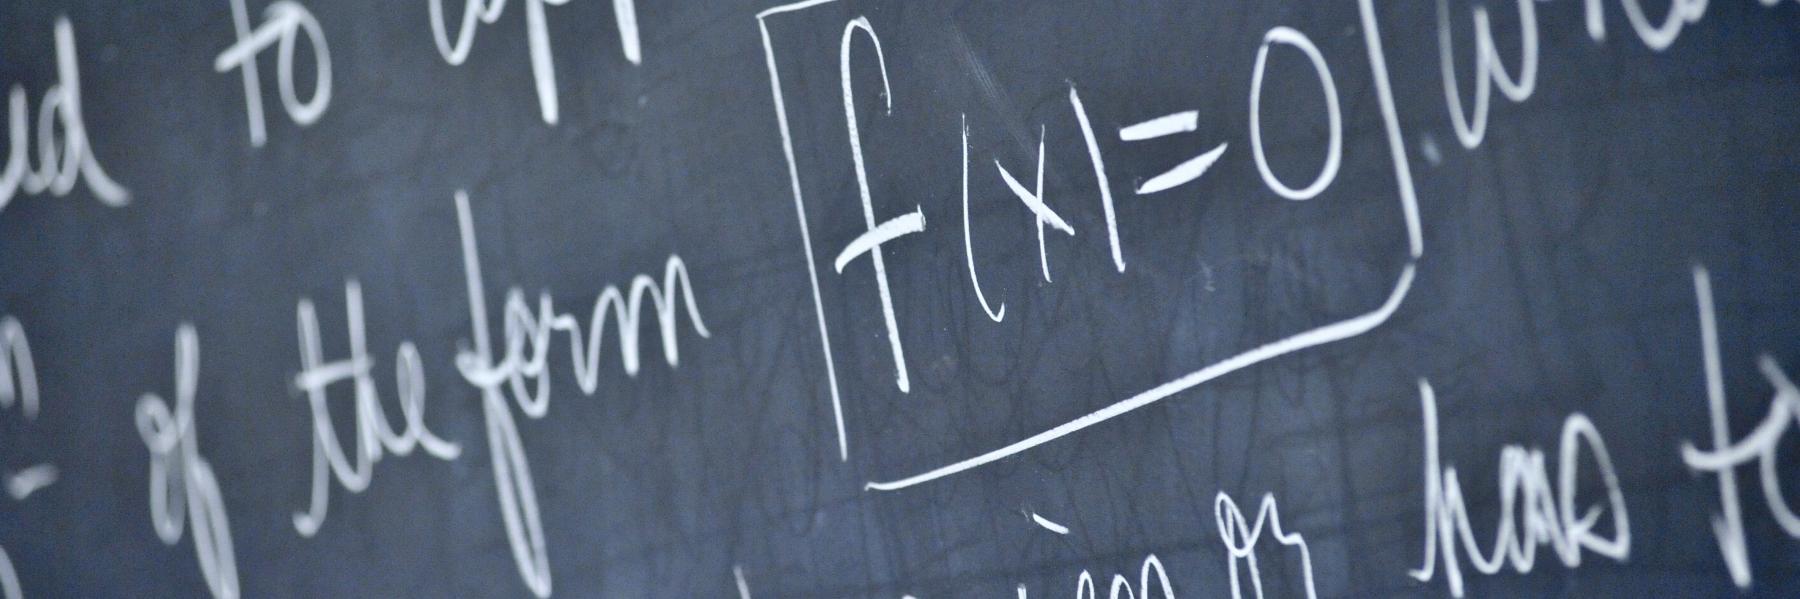 math formula on chalkboard